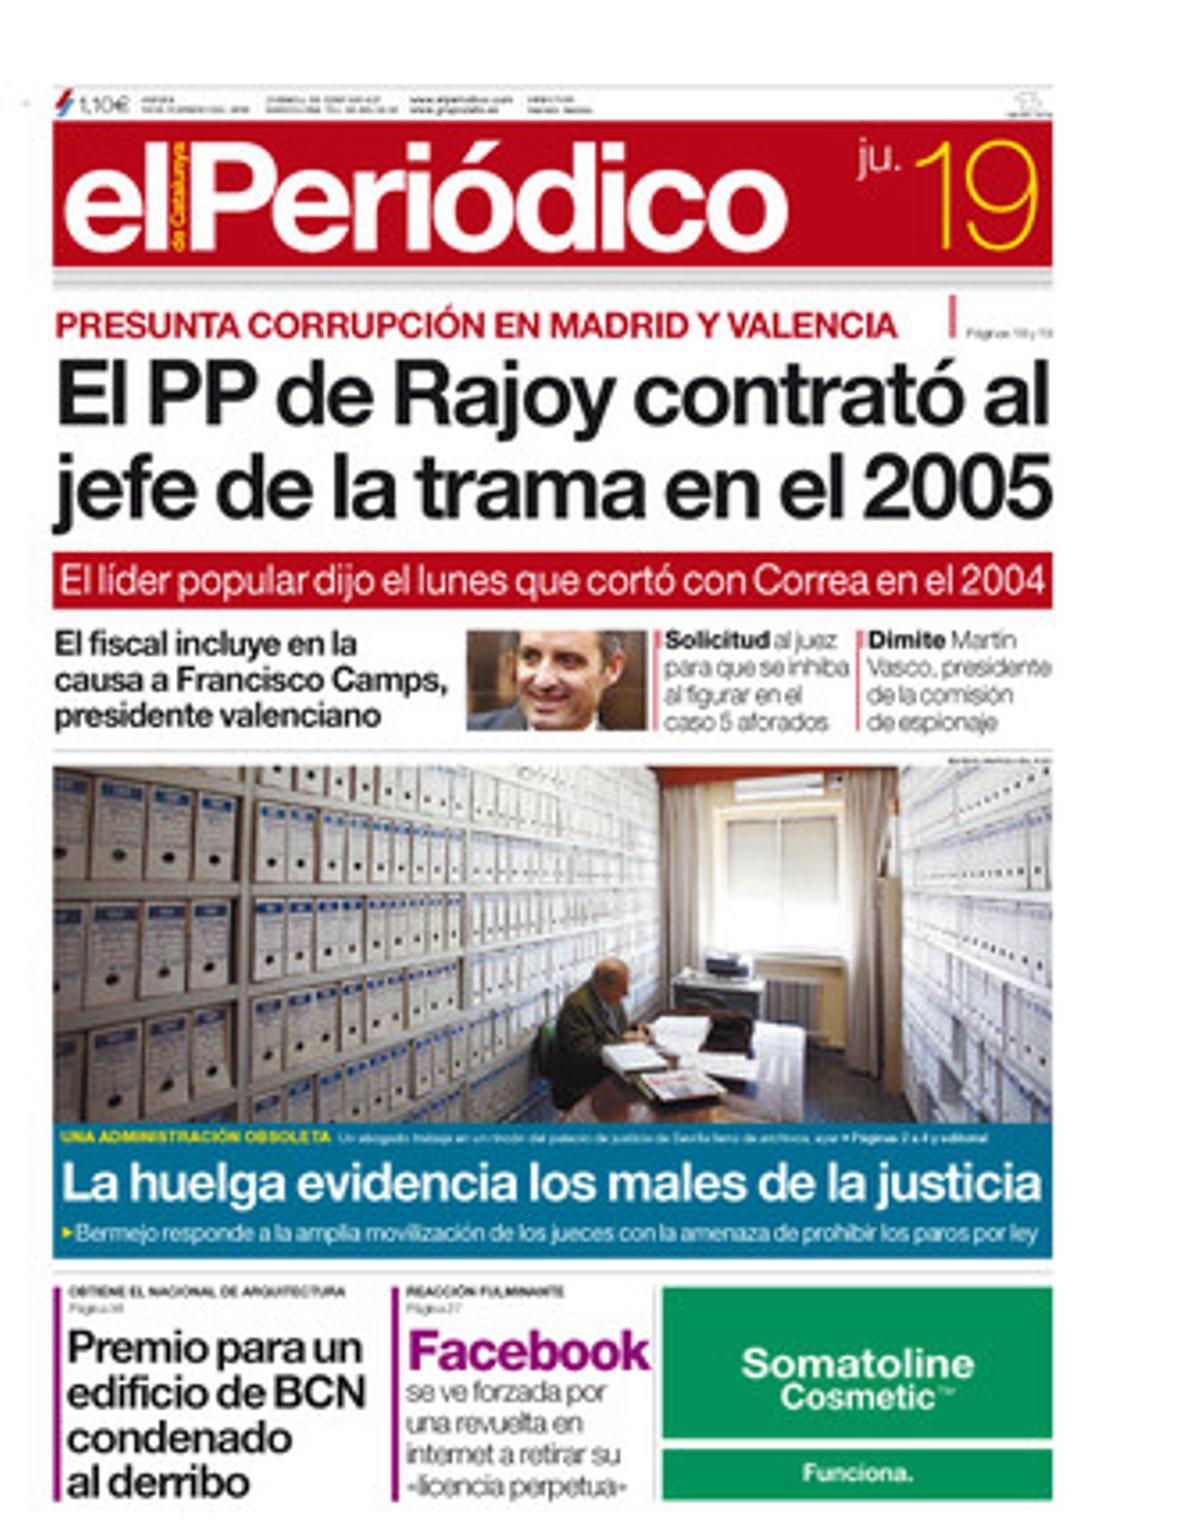 El PP de Rajoy contrató al jefe de la trama Gürtel en el 2005. Portada publicada el 19 de febrero del 2009.